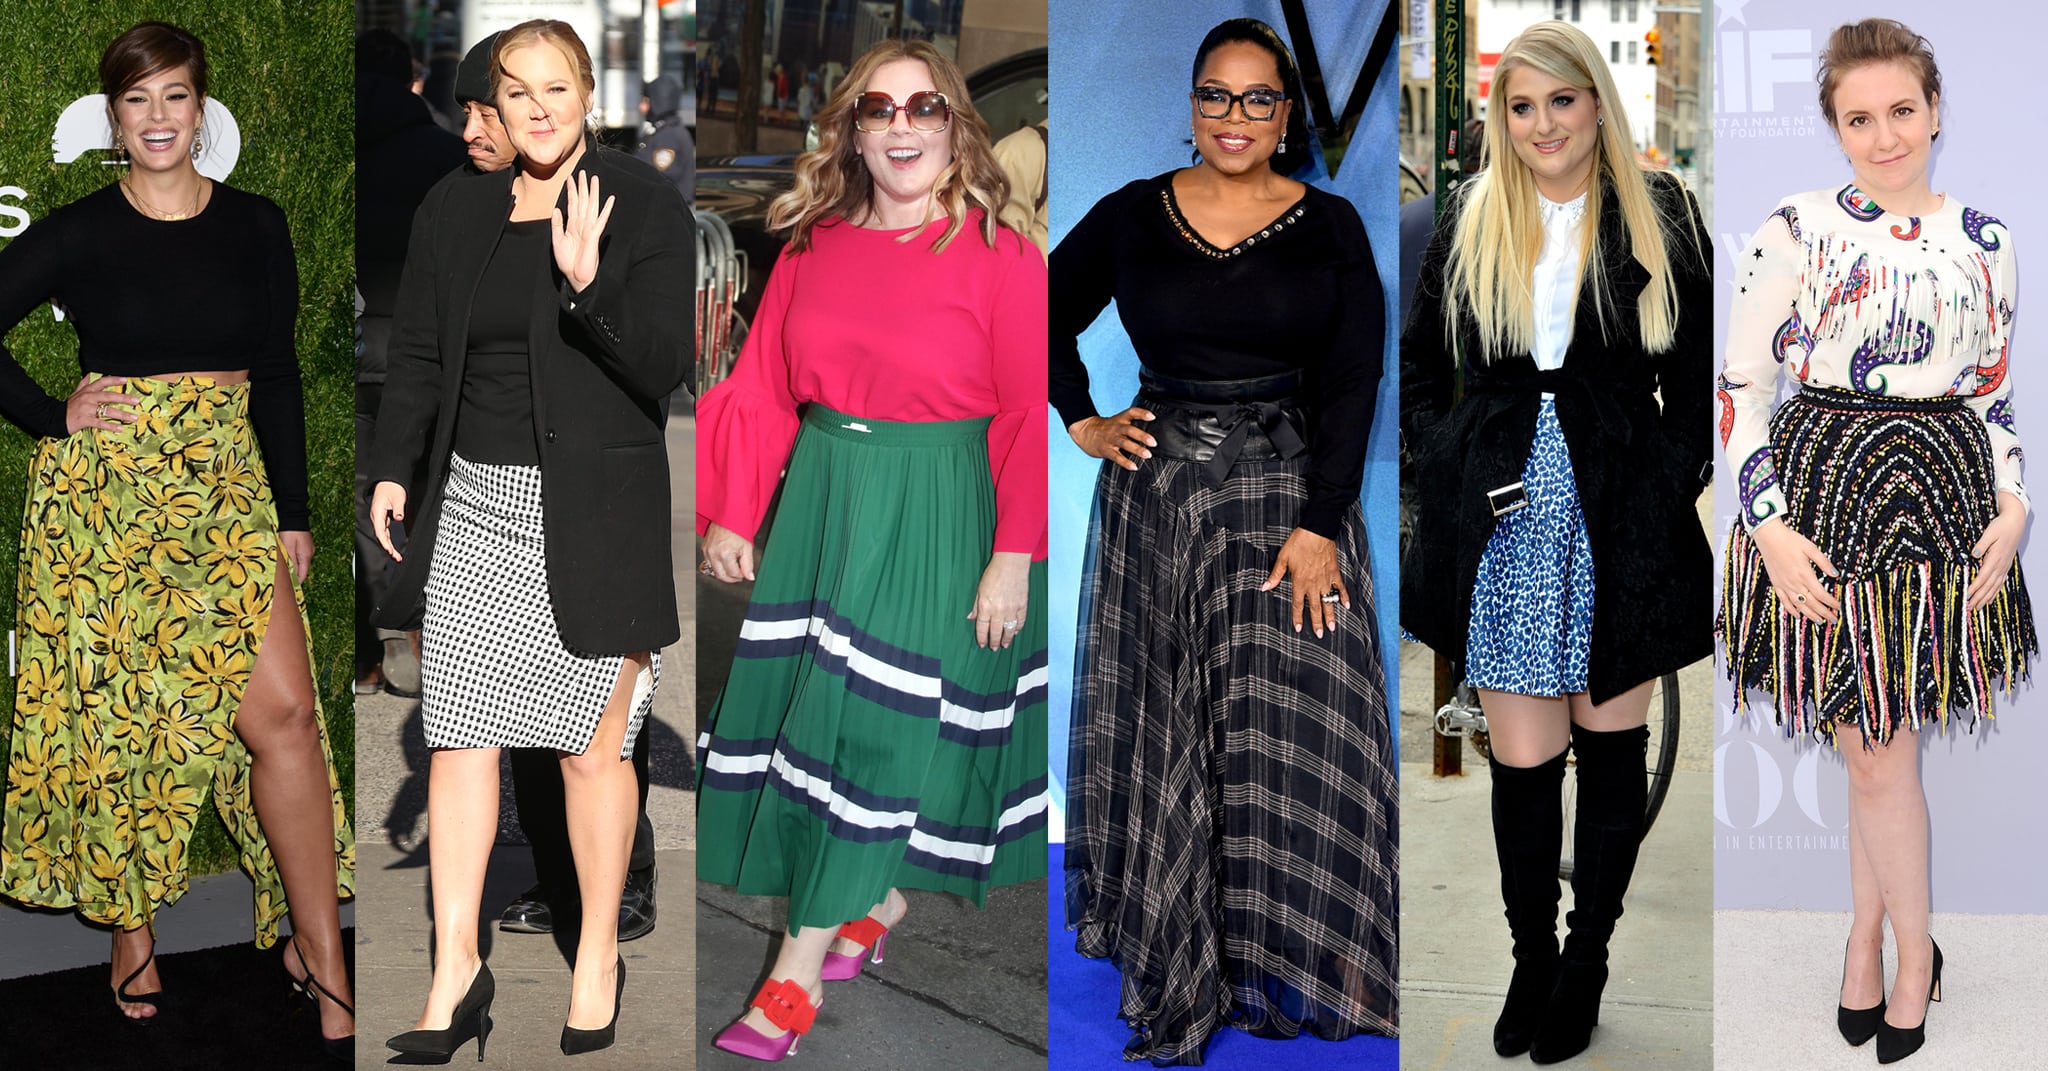 Plus-size celebrities Ashley Graham, Amy Schumer, Melissa McCarthy, Oprah Winfrey, Meghan Trainor, and Lena Dunham in skirts